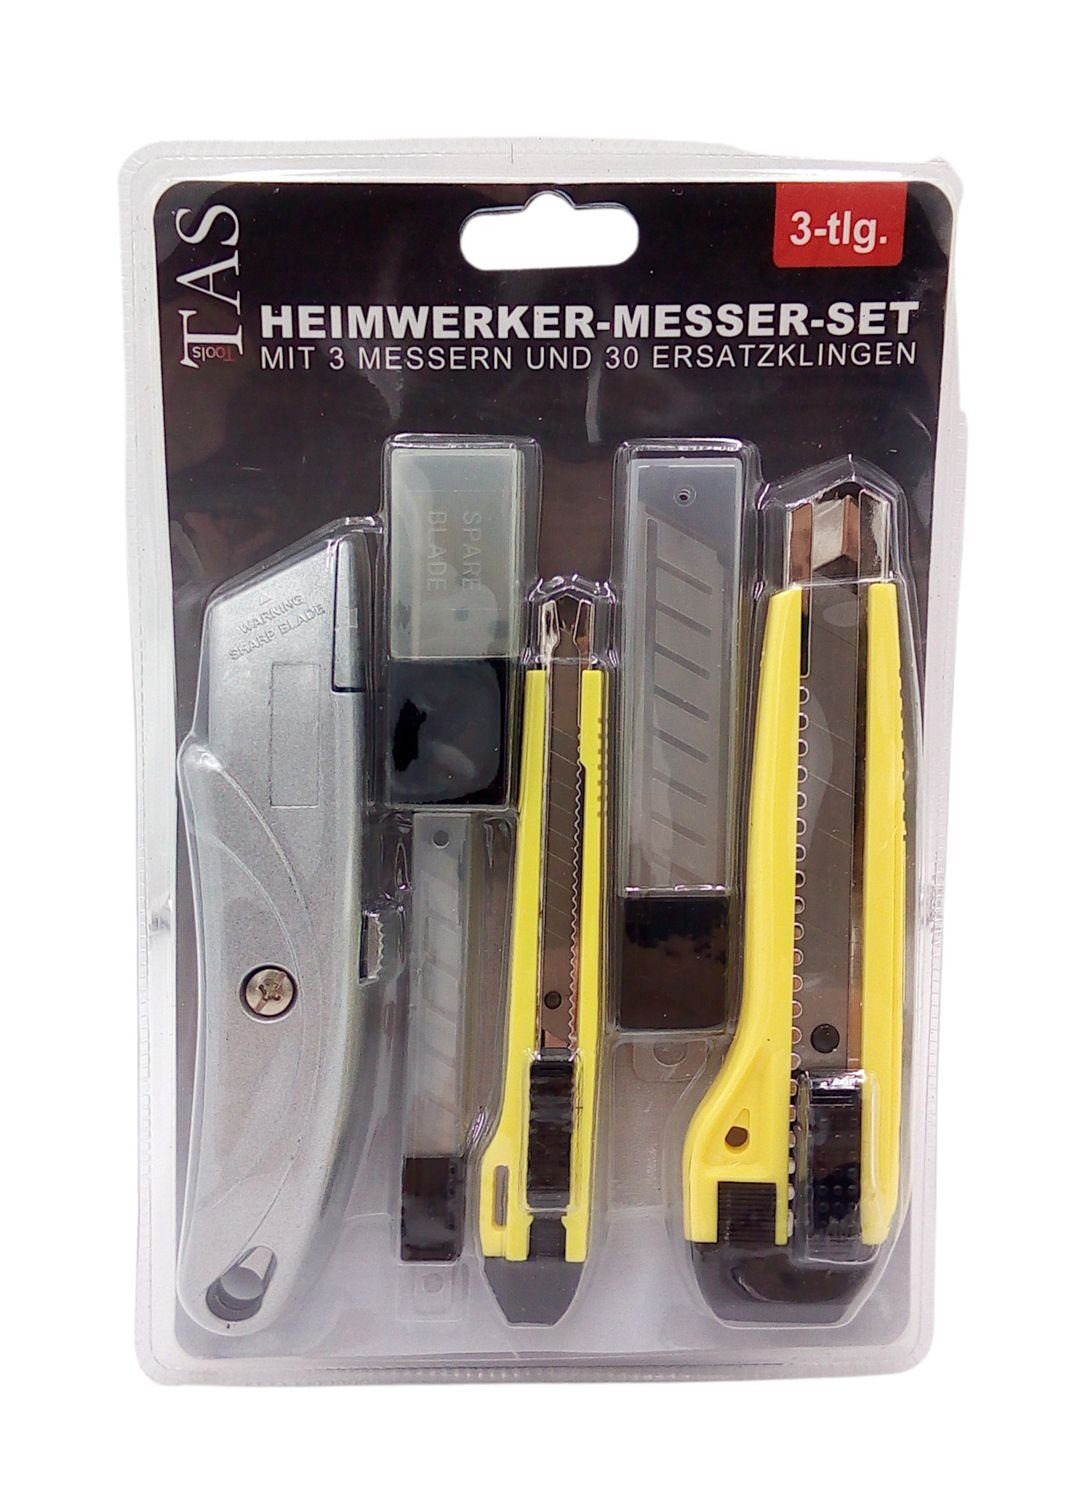 BURI Cuttermesser 3 Cuttermesser + 30 Ersatzklingen Teppichmesser Heimwerkermesser Trape